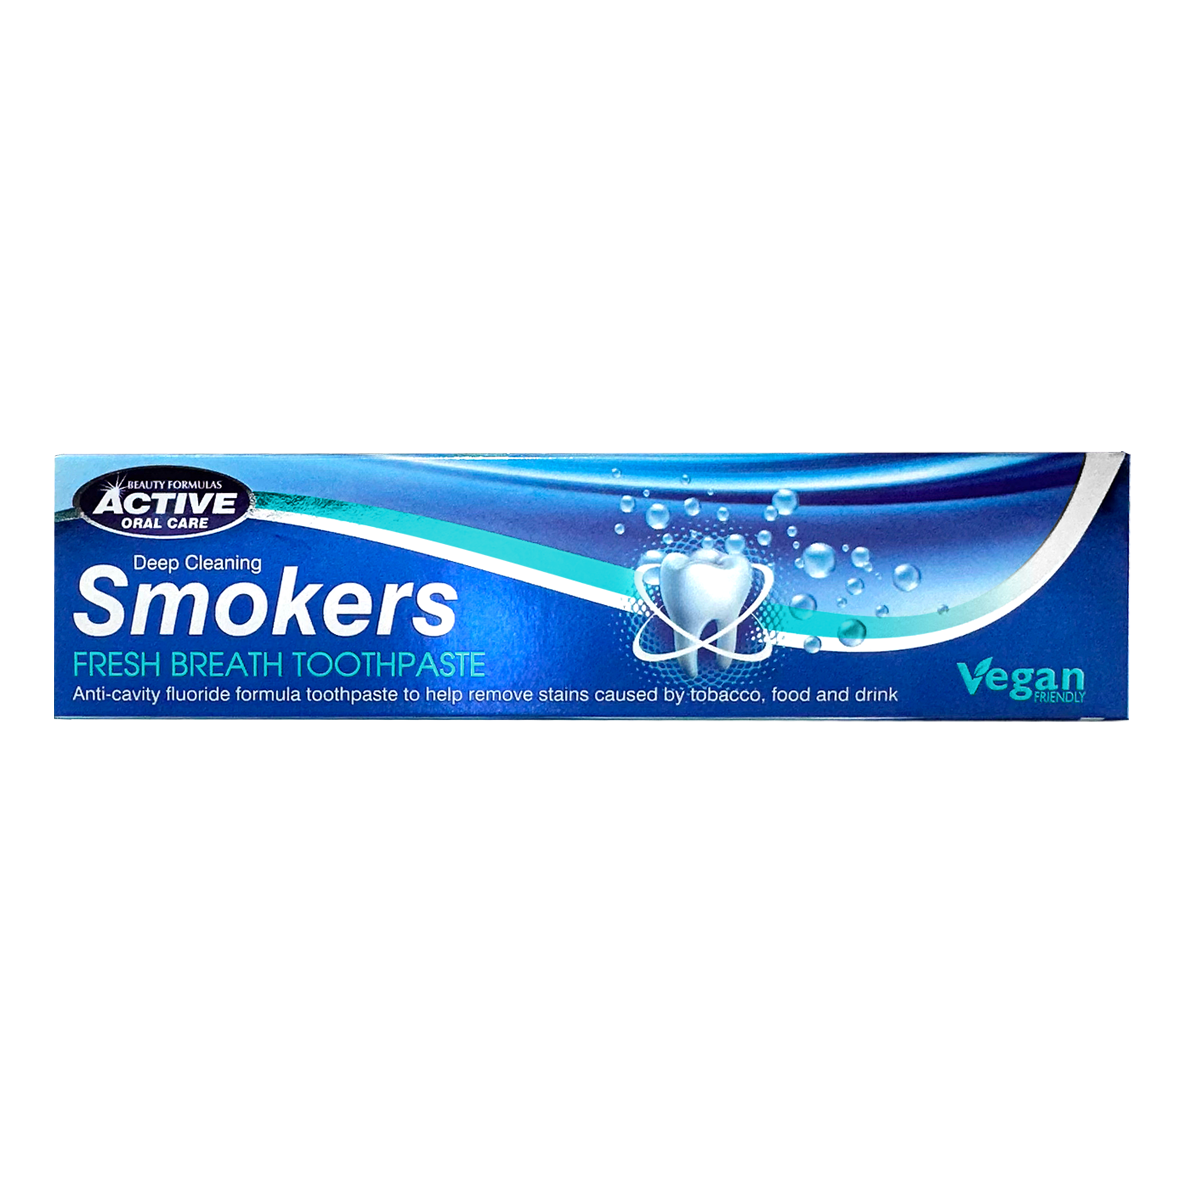 Smokers fresh breath toothpaste.